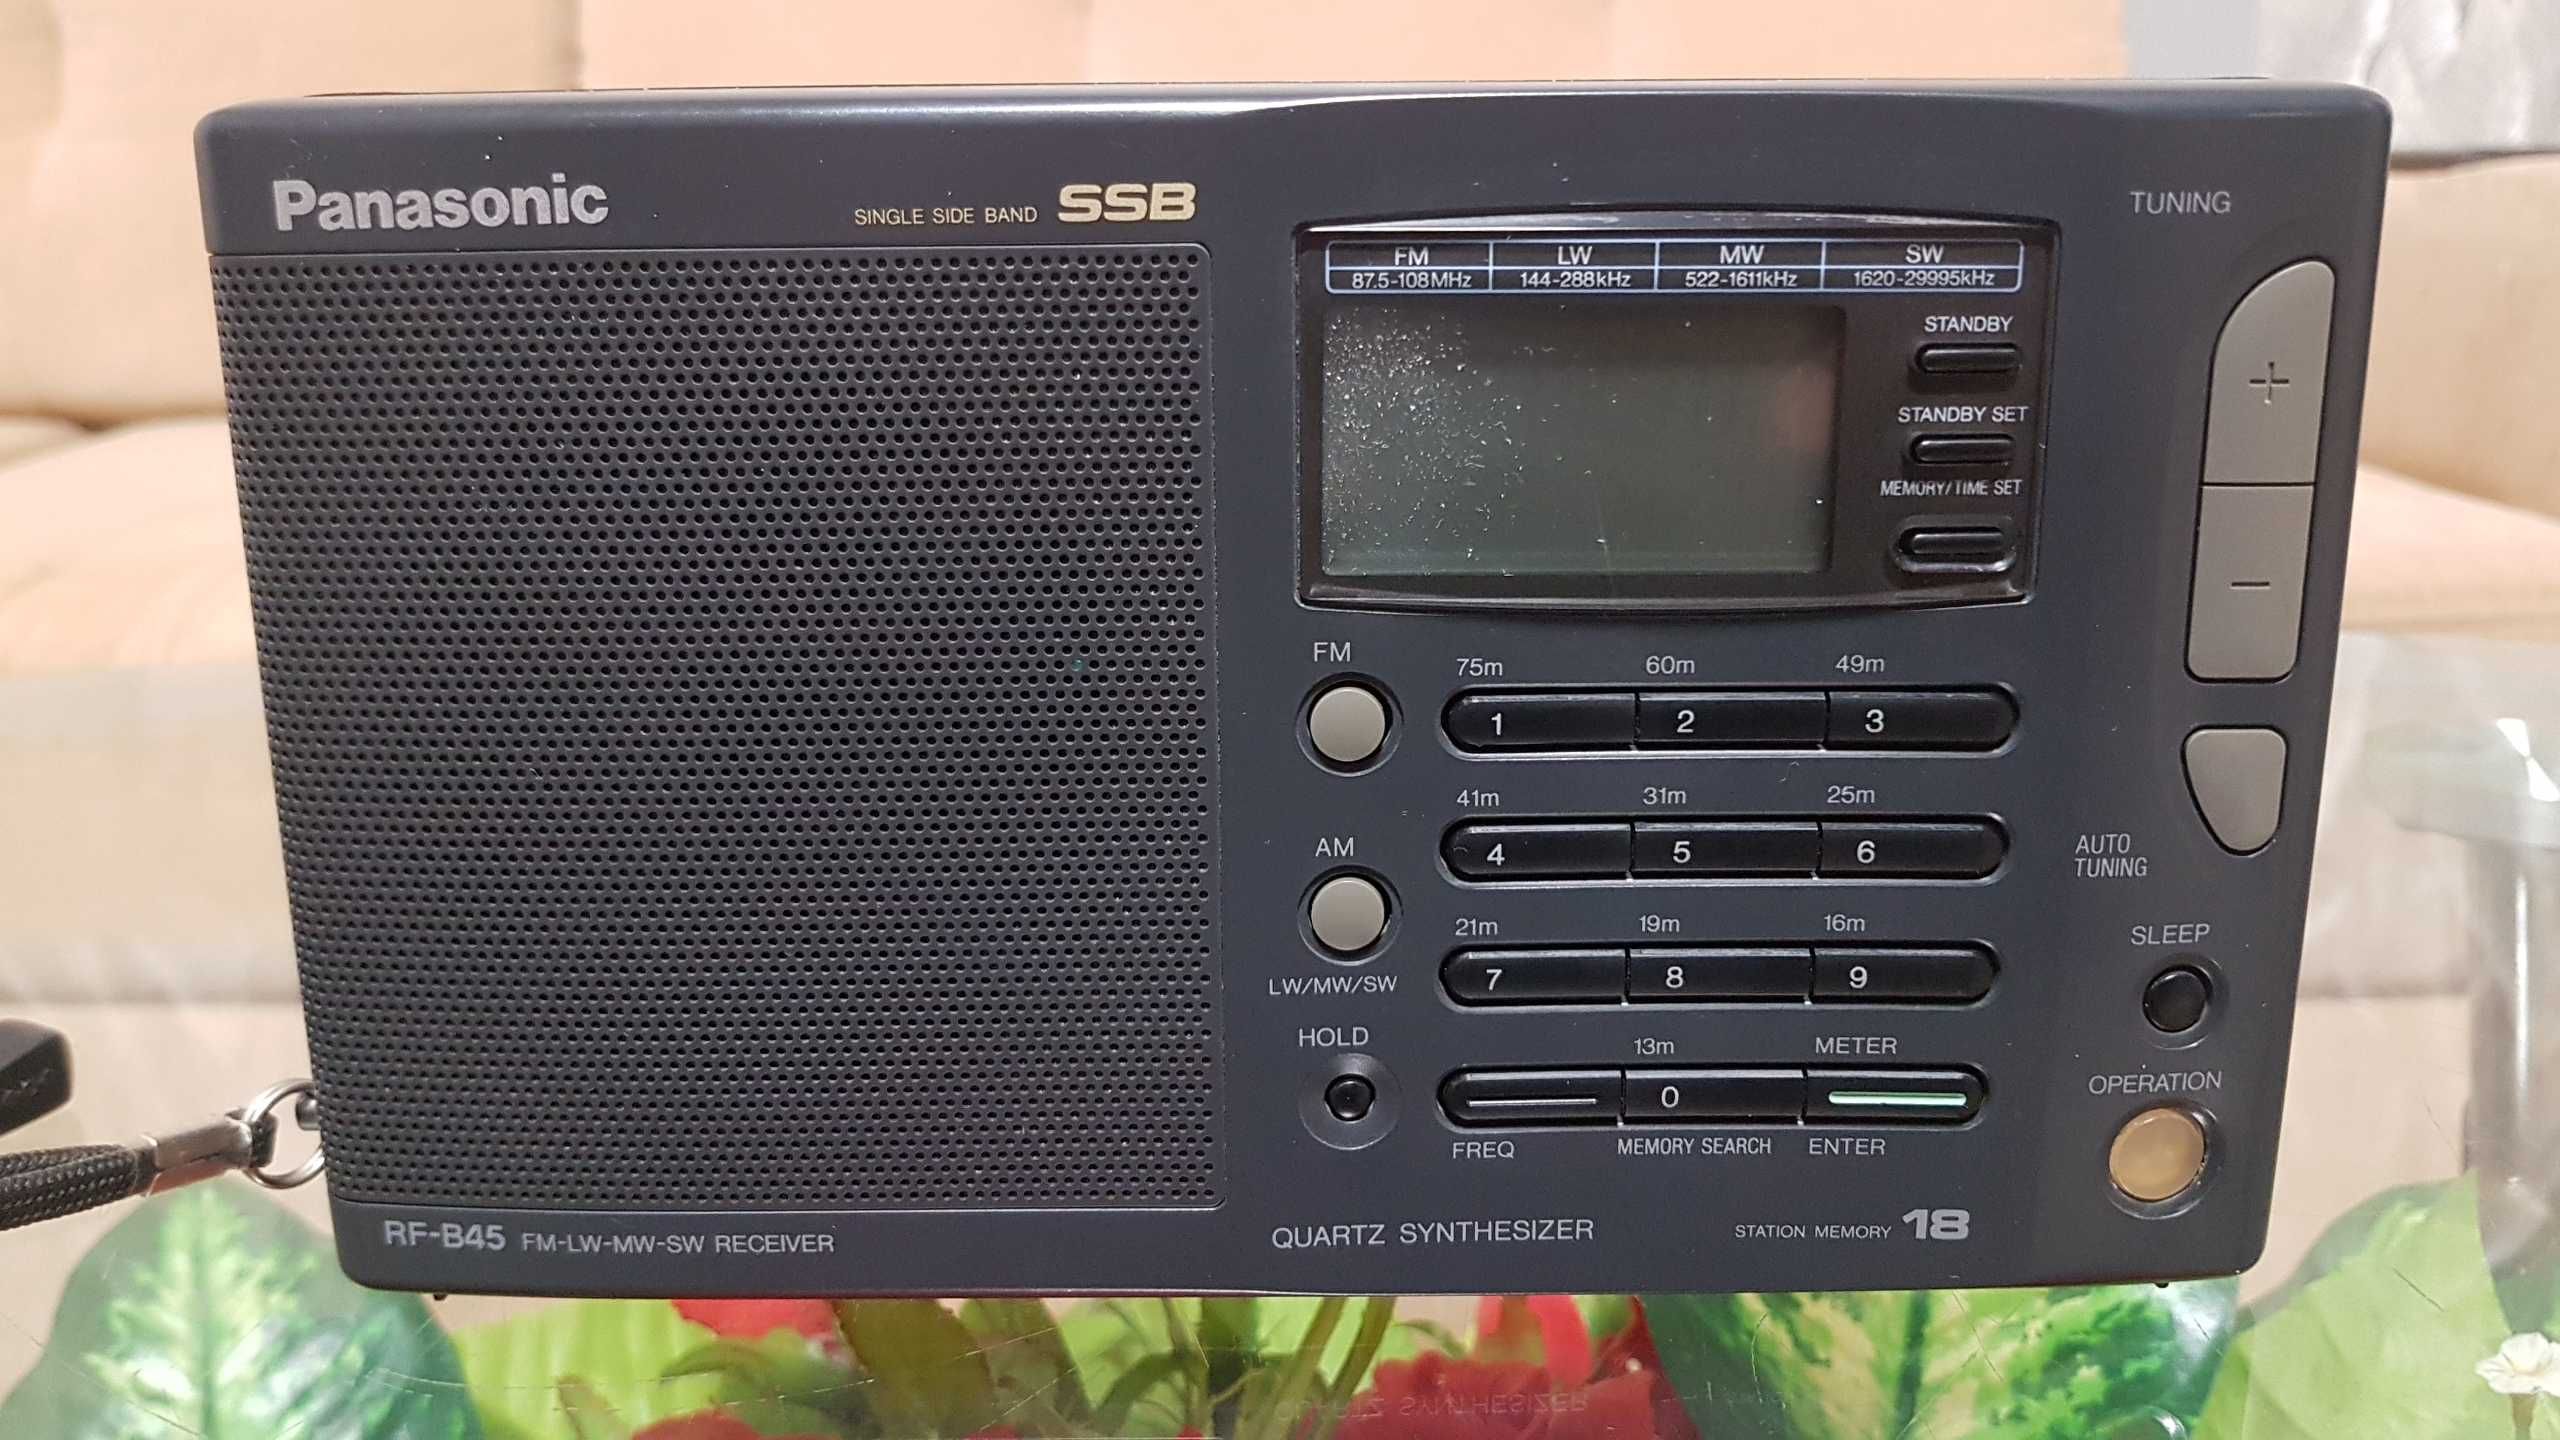 Радио Panasonic RF-B45 FM-LW-MW-SW Receiver made in Japan